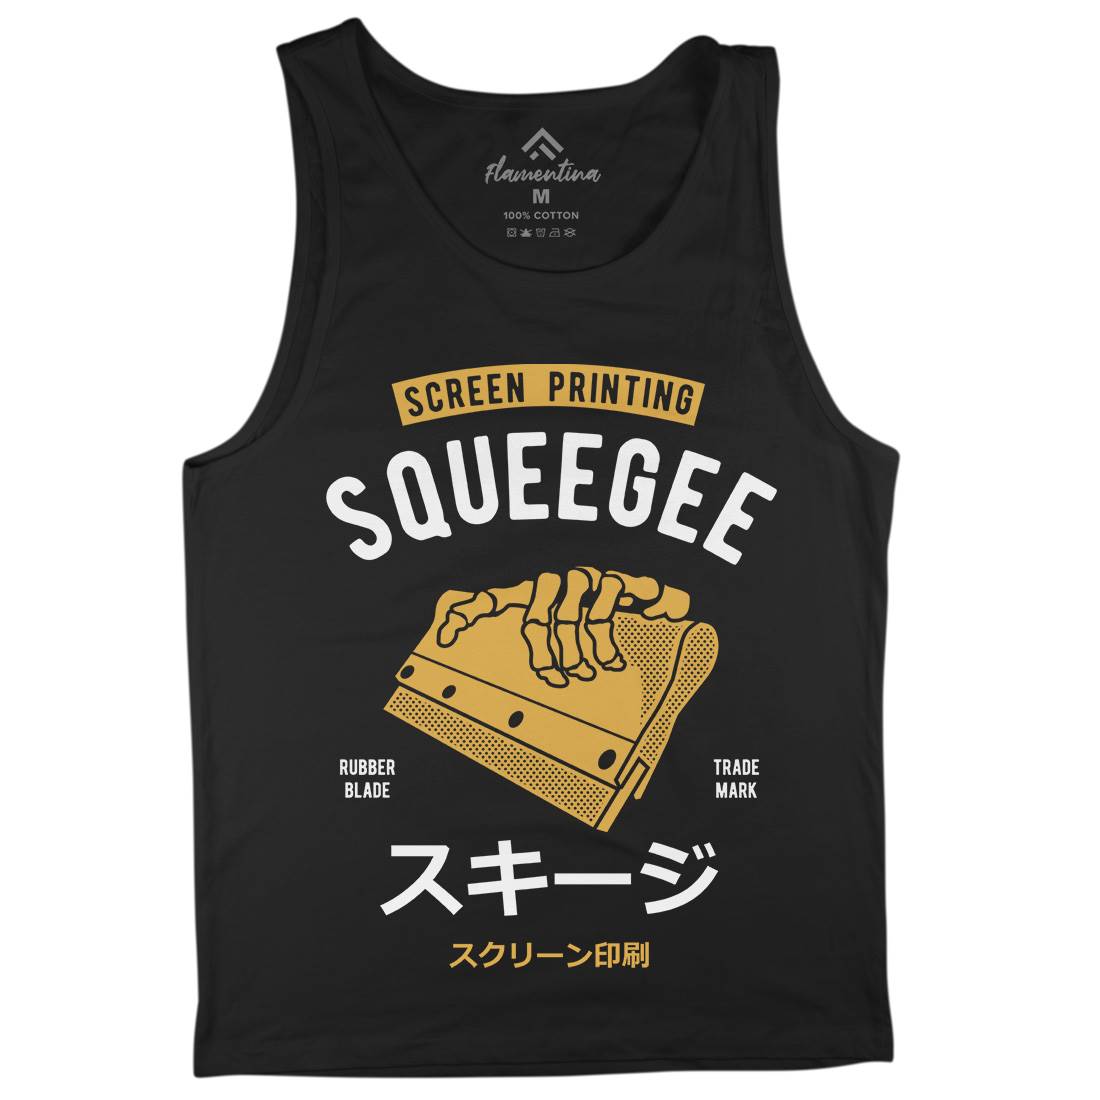 Squeegee Social Club Mens Tank Top Vest Work A282